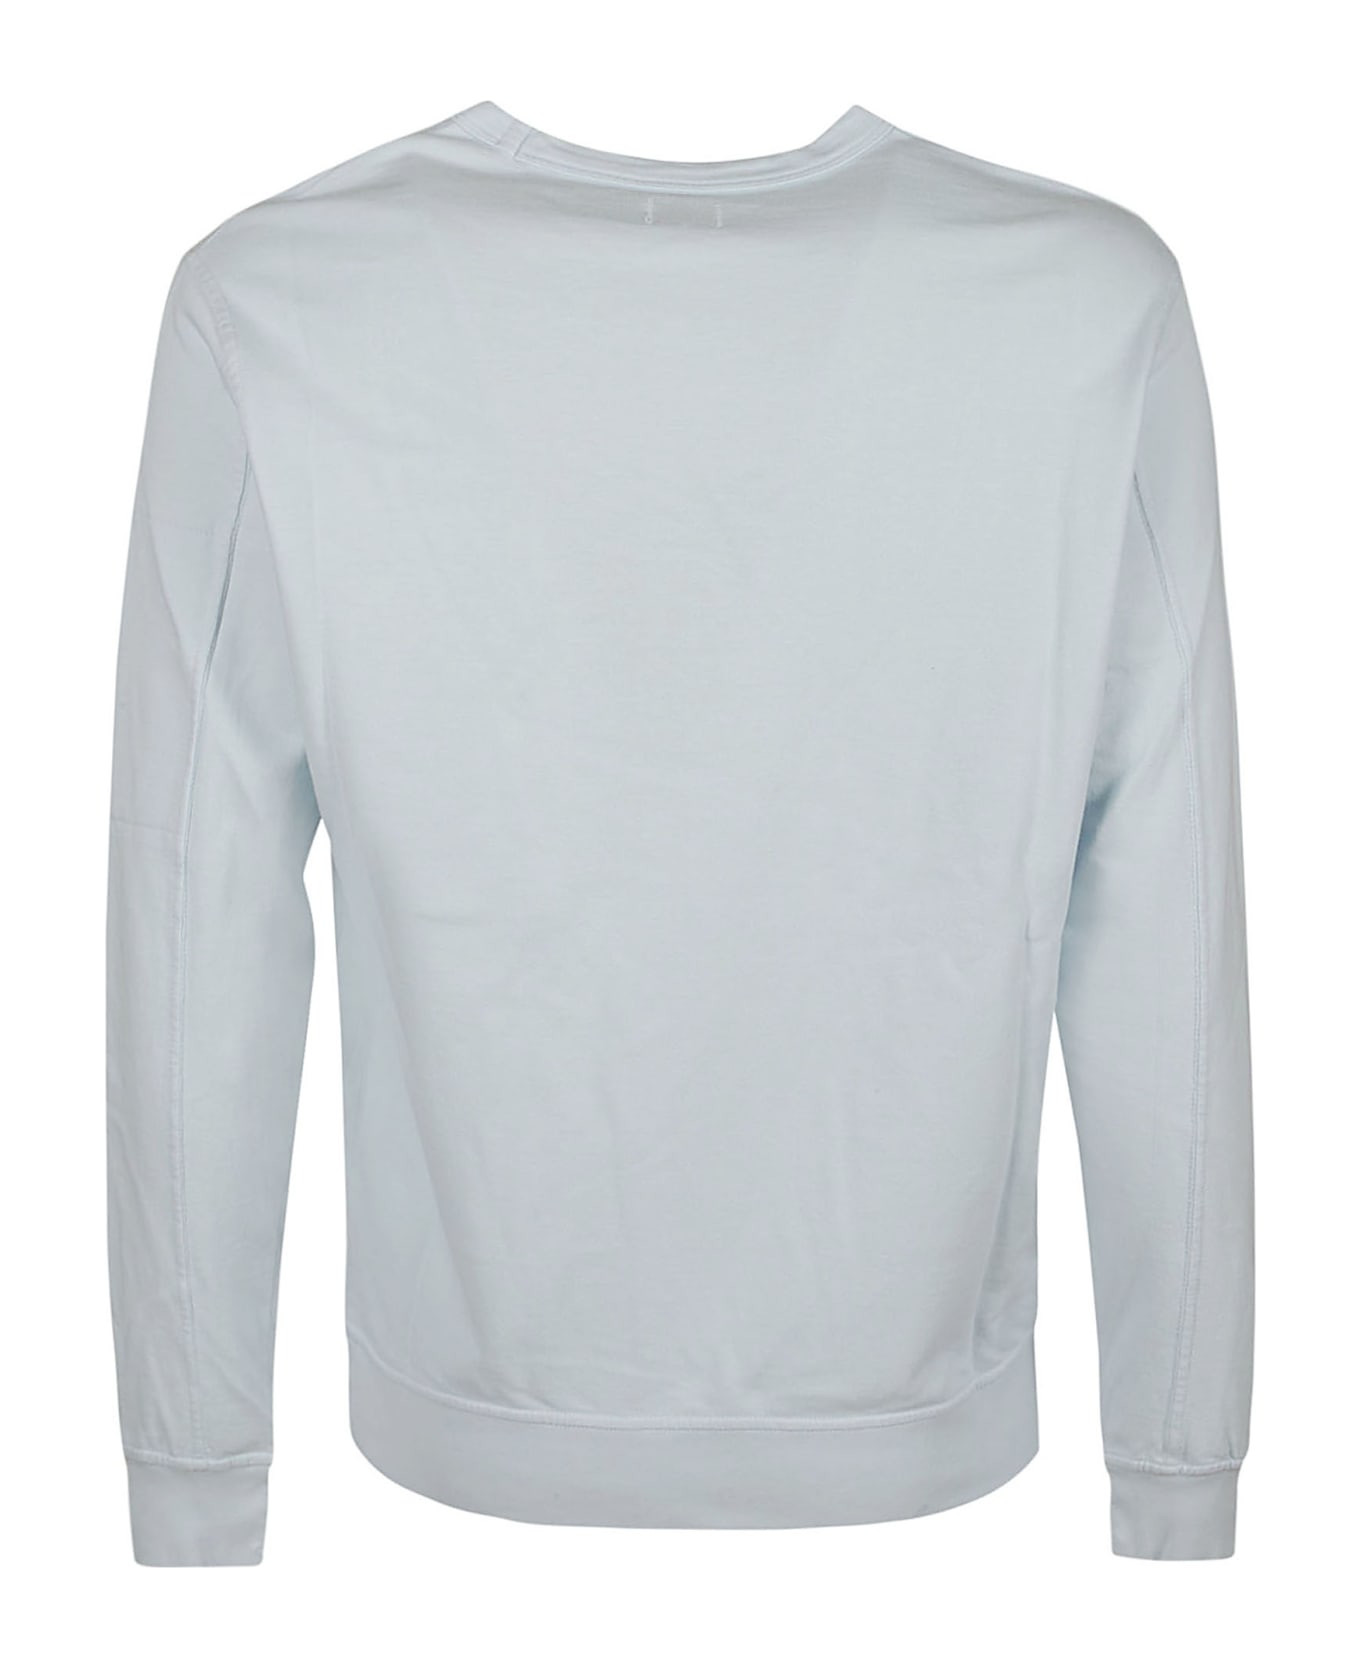 C.P. Company 'light Fleece' Light Blue Cotton Sweatshirt - STARLIGHT BLUE